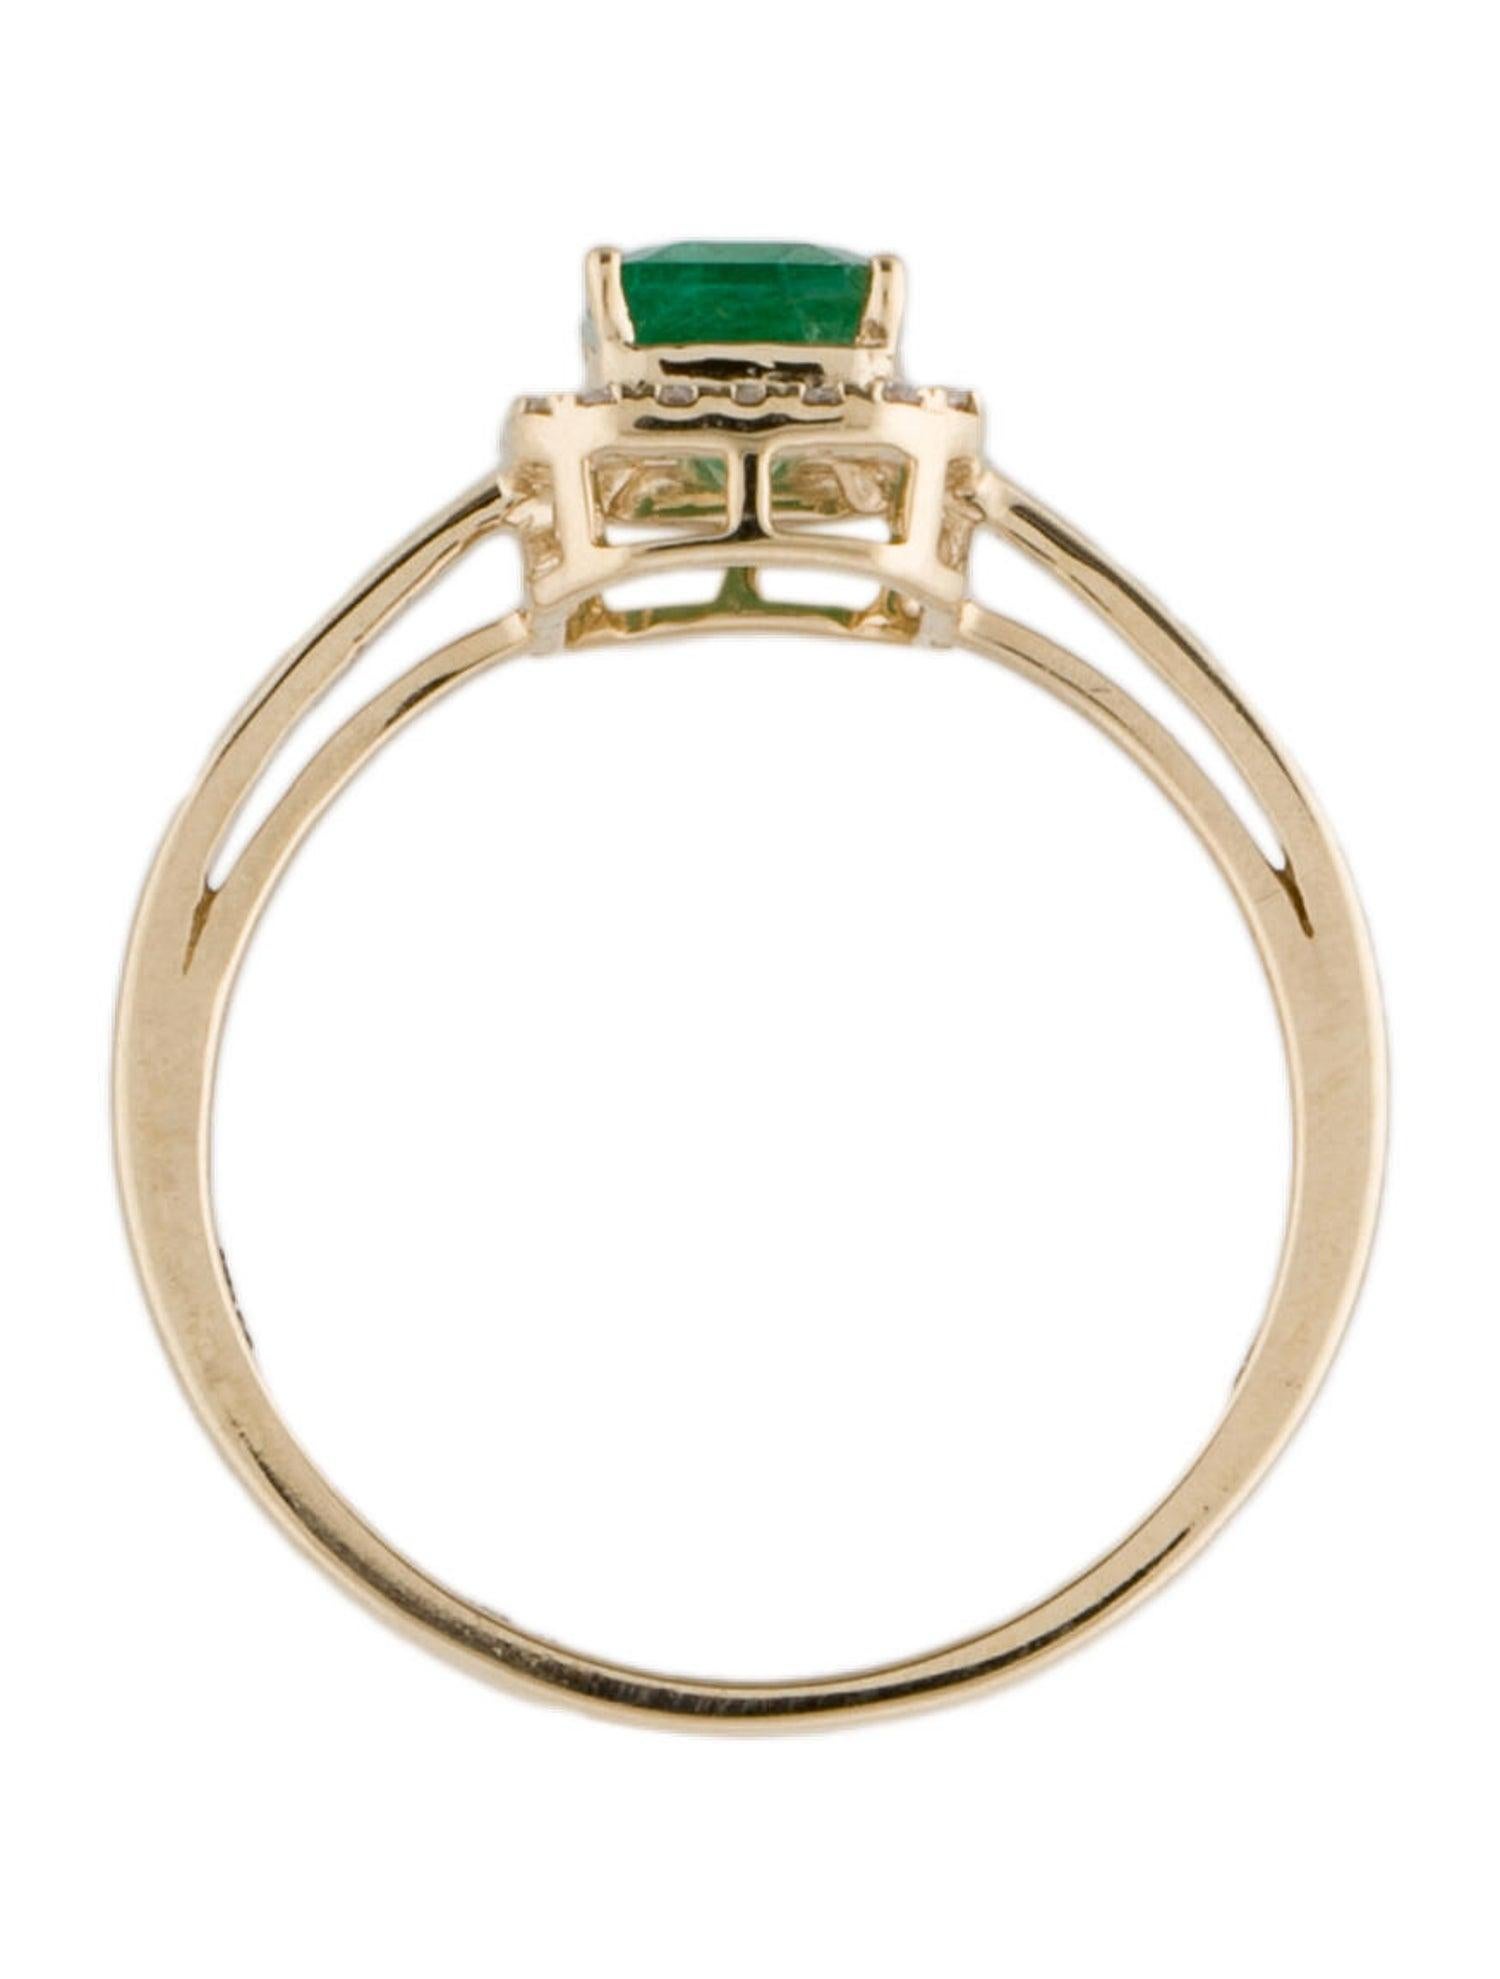 Brilliant Cut Exquisite 14K 1.00ct Emerald & Diamond Ring - Size 7 - Elegant Statement Jewelry For Sale